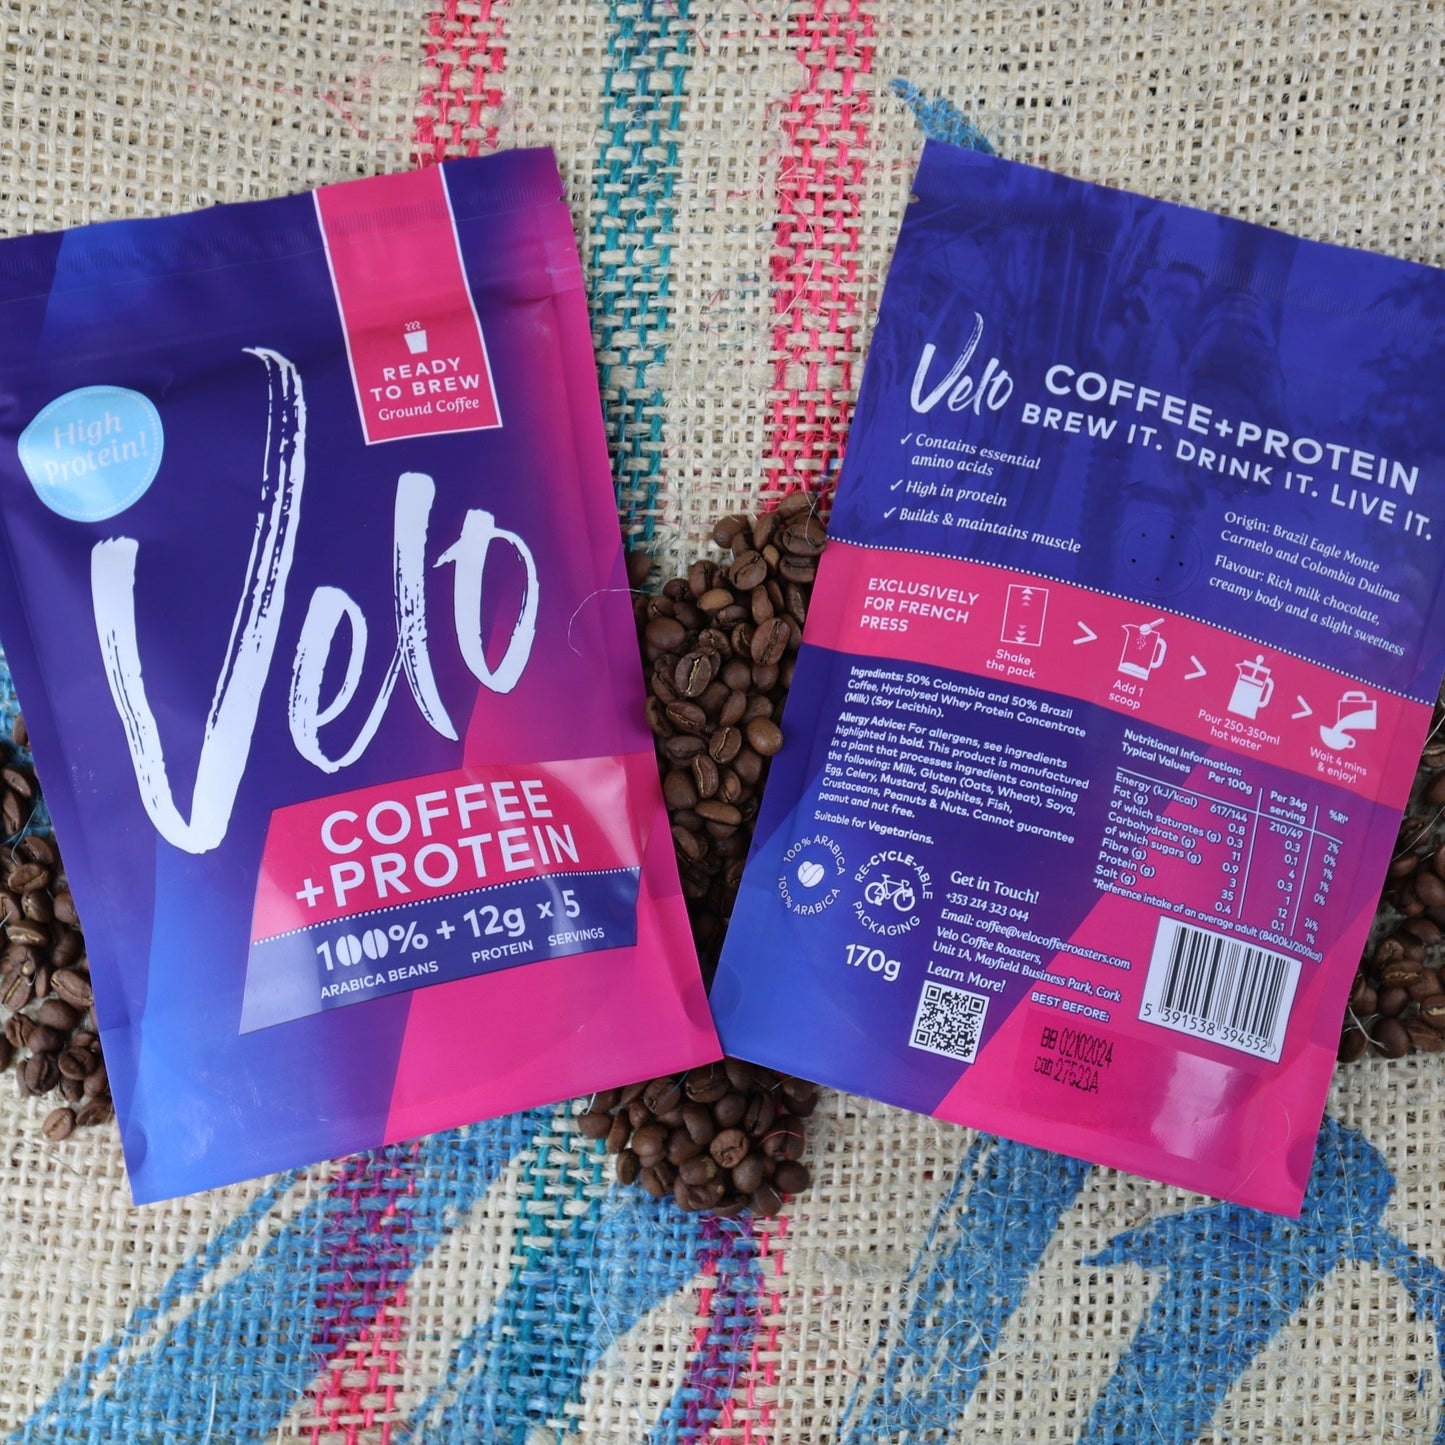 Velo Coffee + Protein - 4 Pack - Velo Coffee Roasters